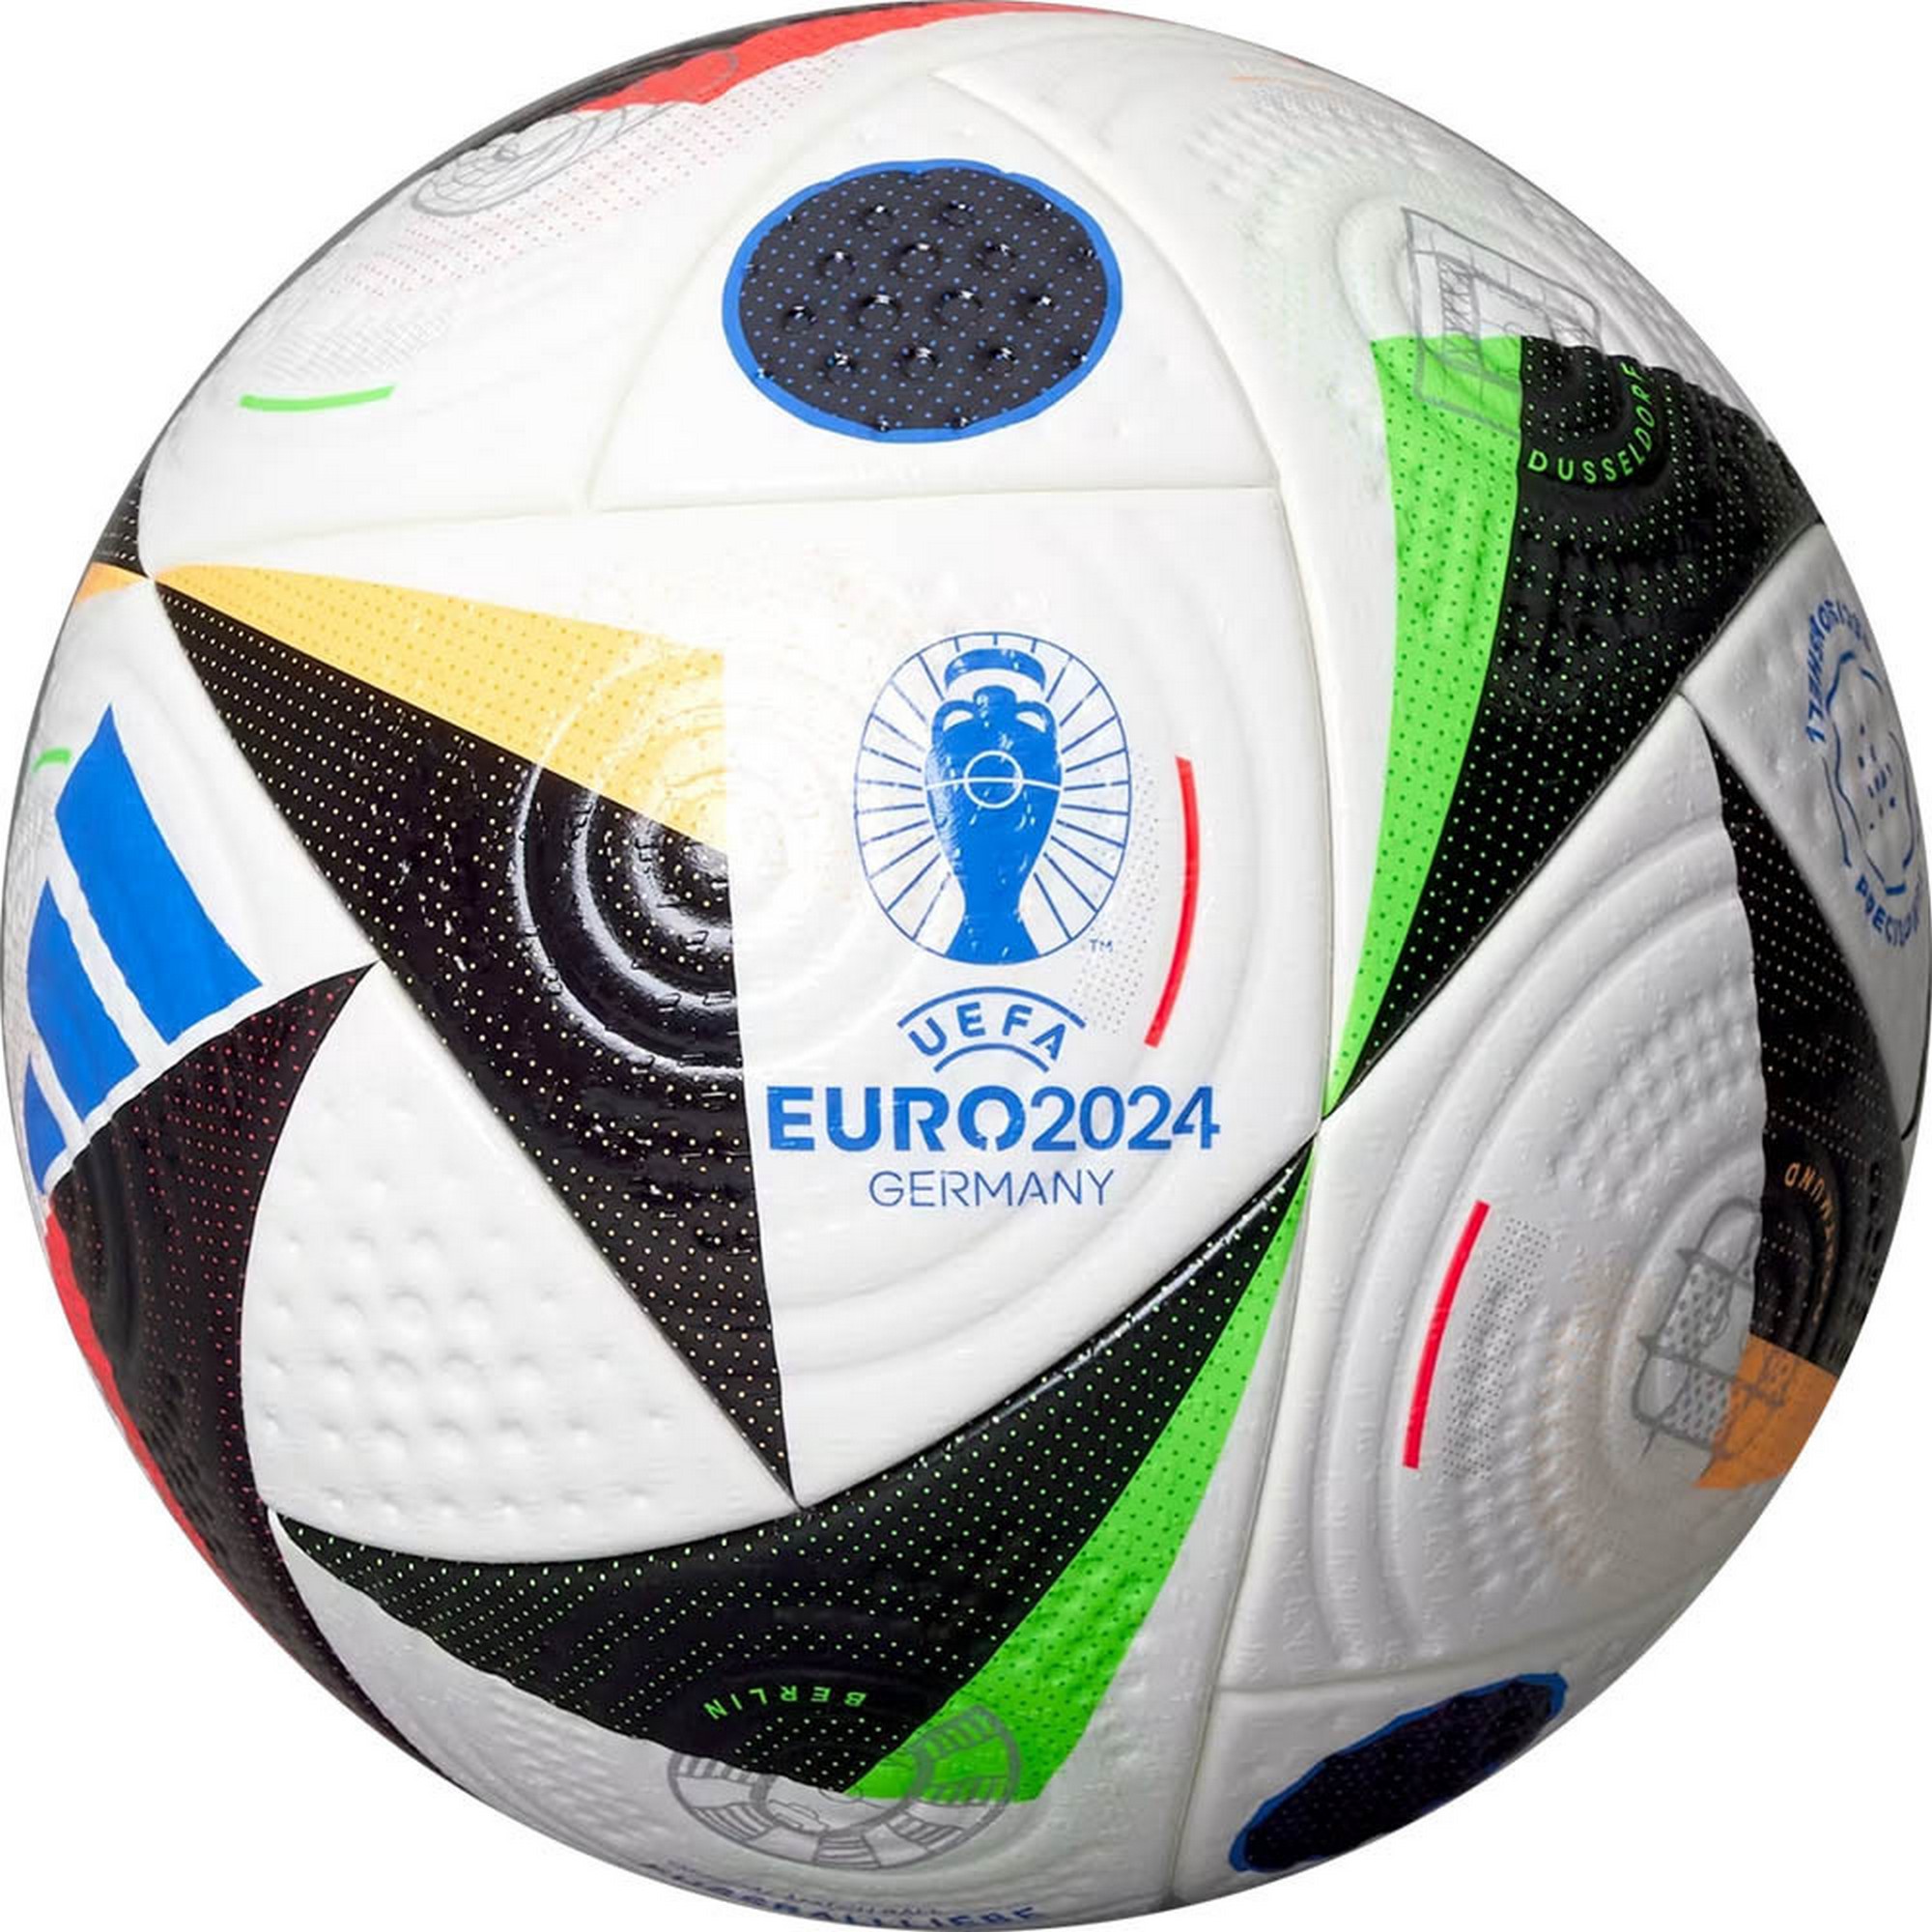   Adidas Euro24 Fussballliebe PRO IQ3682 FIFA PRO, .5